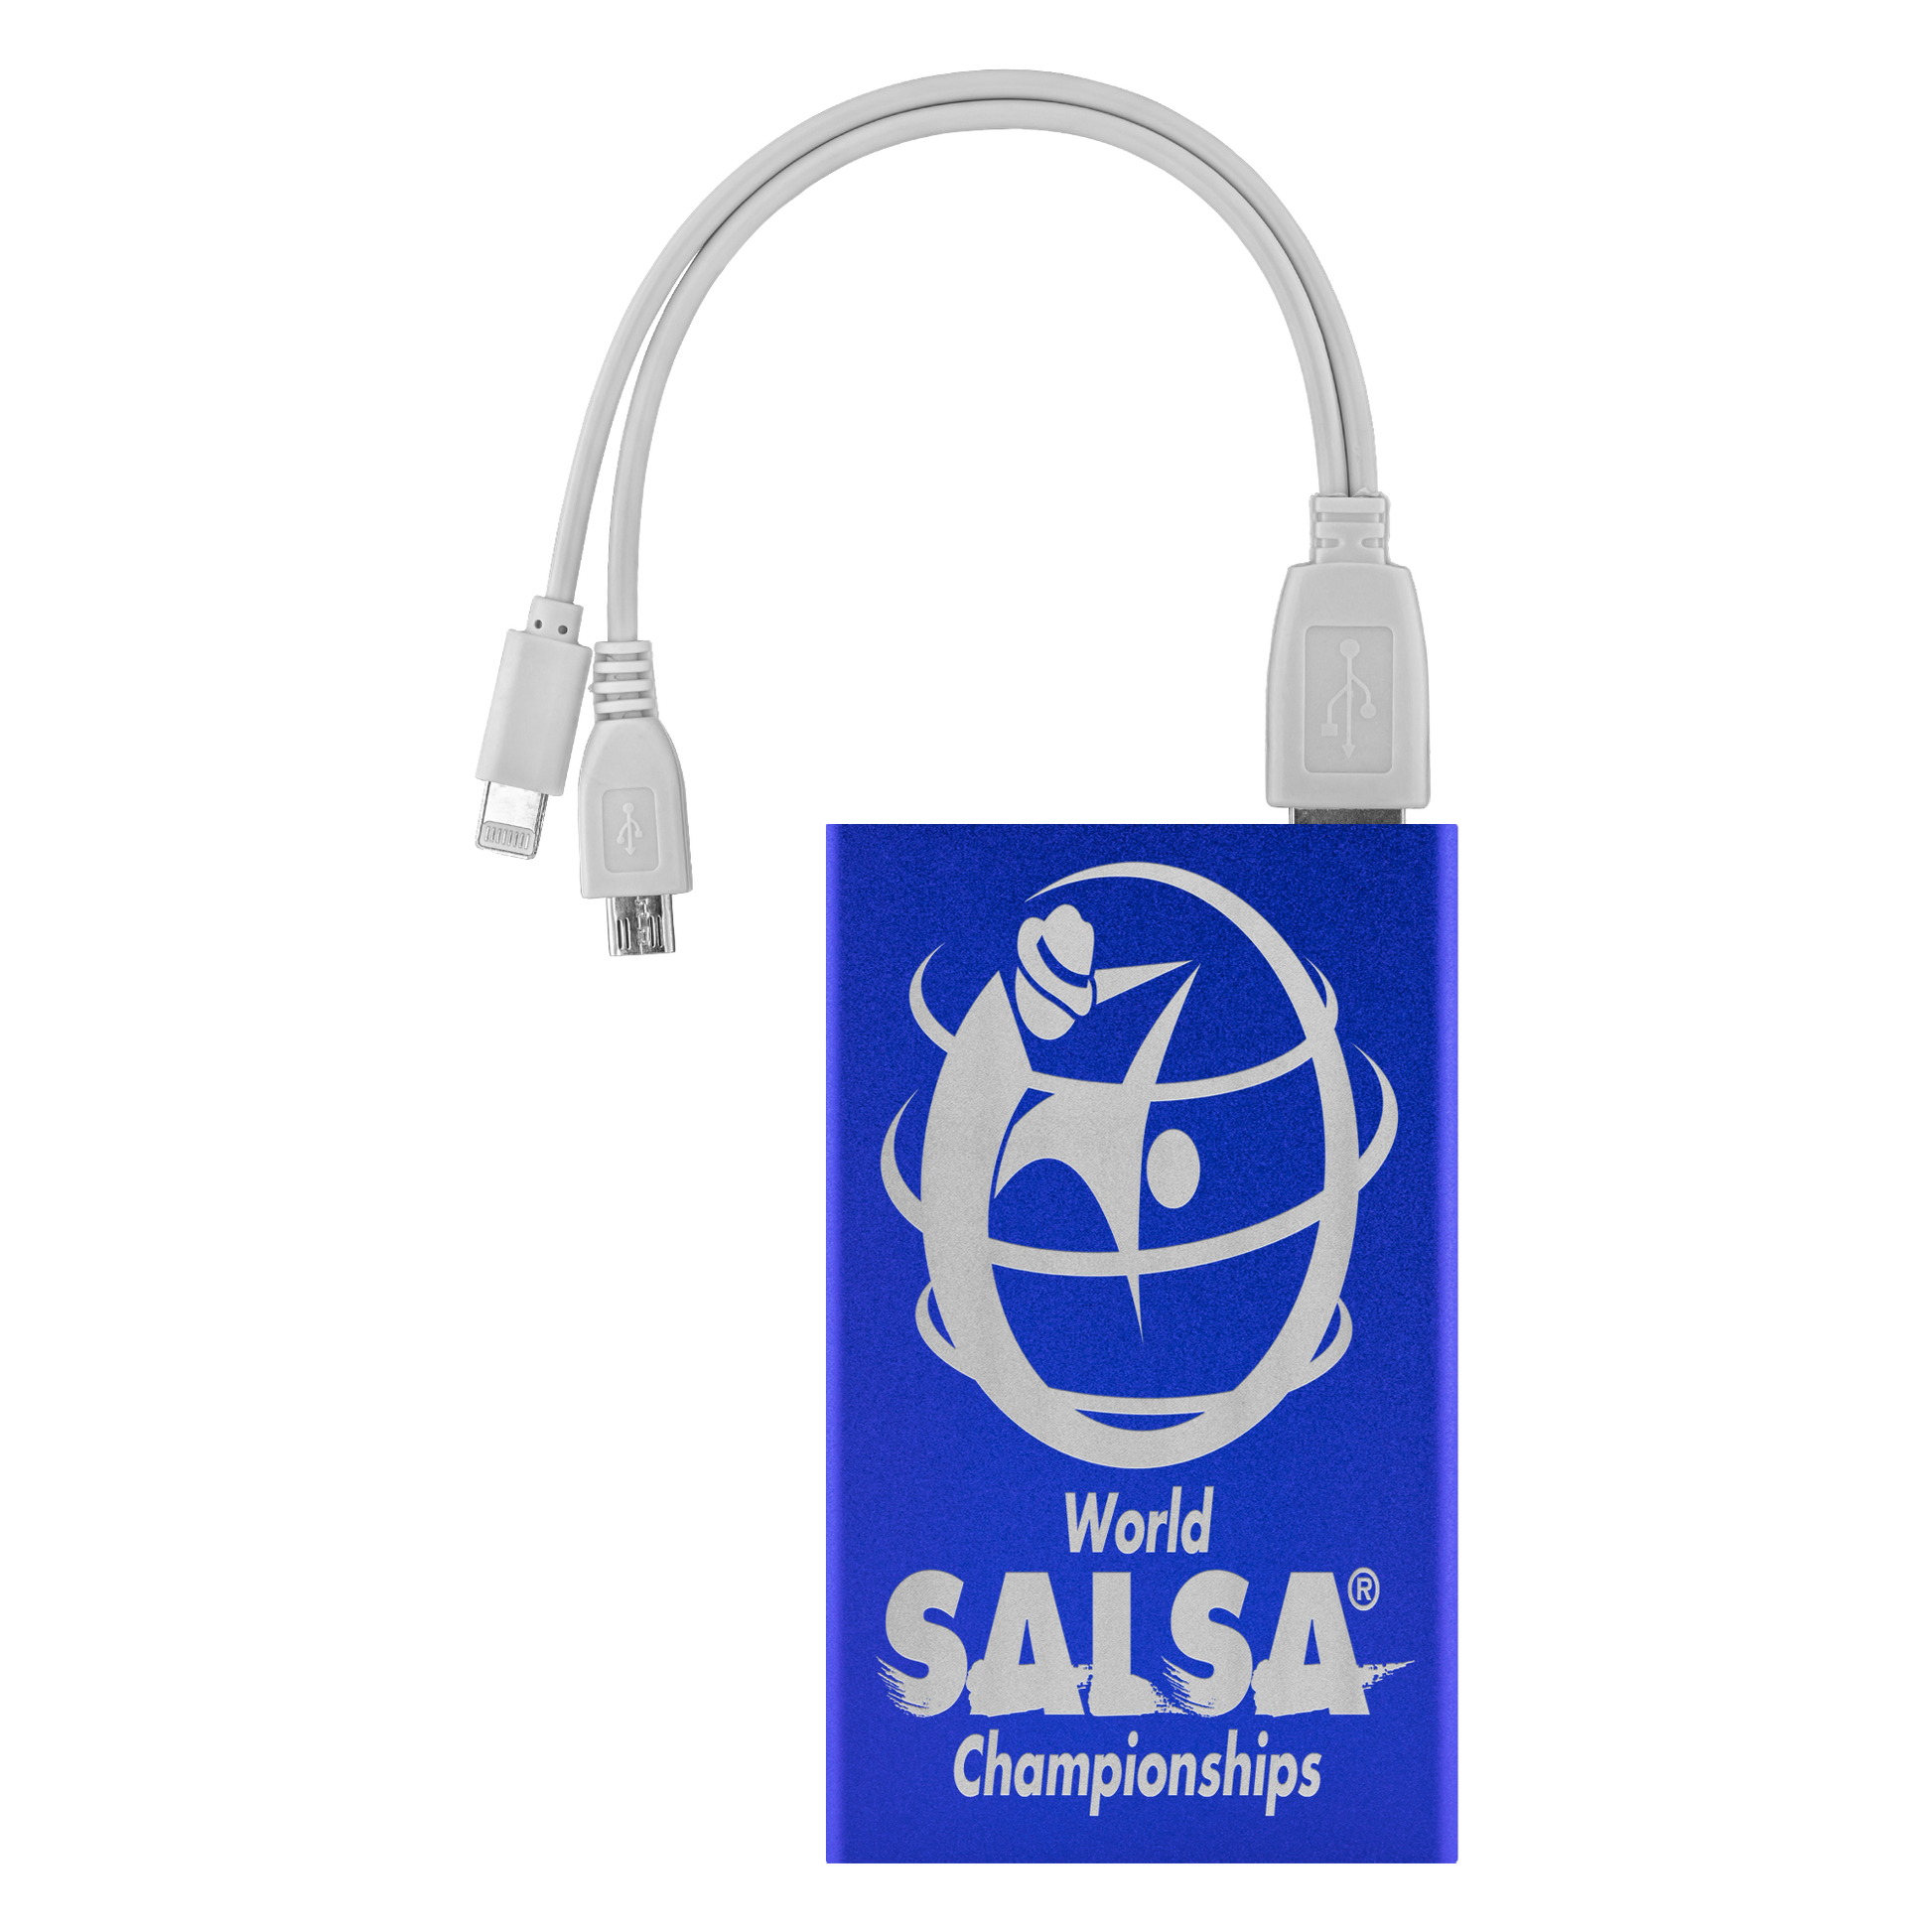 Official WSC Power Bank - World Salsa Championships